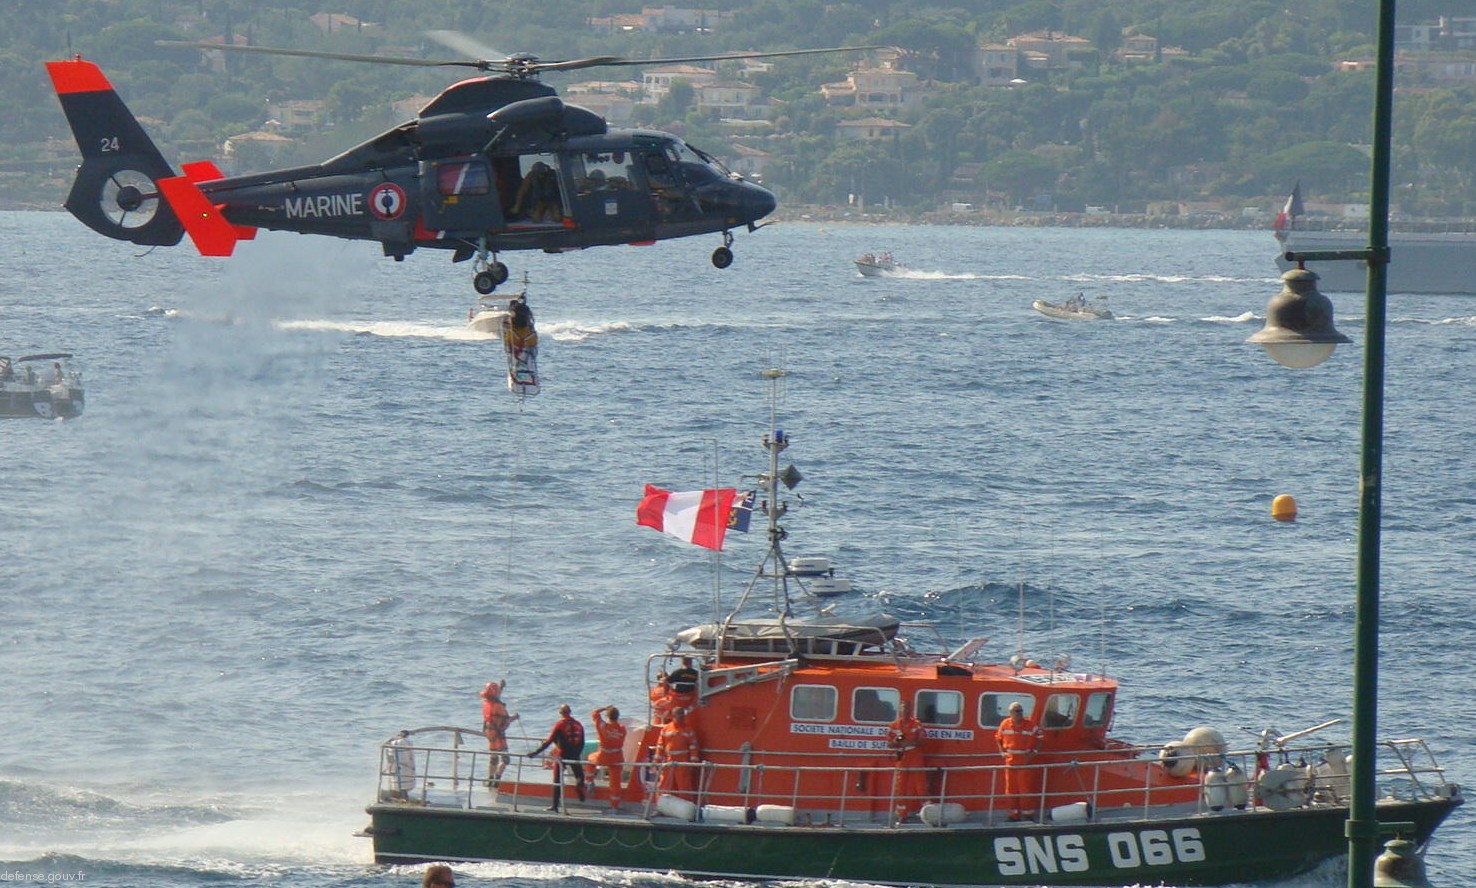 sa 365 dauphin helicopter french navy marine nationale aeronavale flottille 07 6024